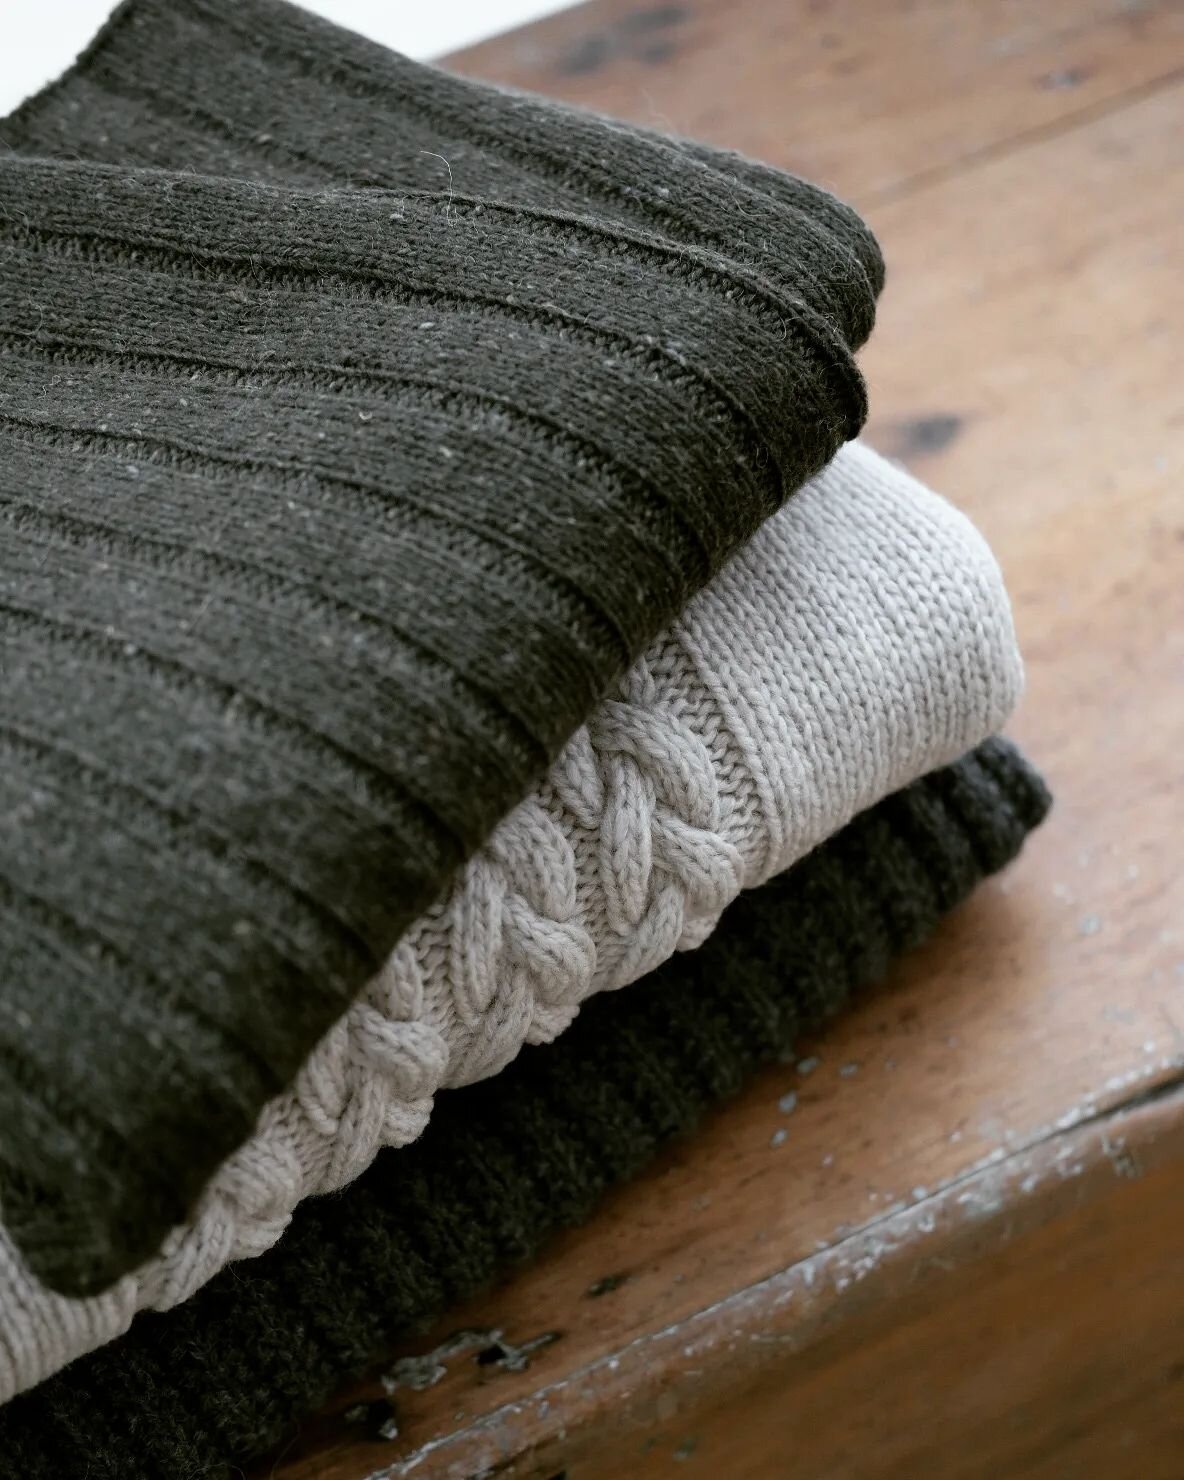 Handmade wardrobe💭

Currently writing a pattern for Lori palazzo trousers🌱

#knittedwardrobe #handmadewardrobe
#slowfashion #woolenpants #woolentrousers #knittedtrousers #knittedpants #loripalazzos #knittedsweater #hallasweater #slowfashionmovement